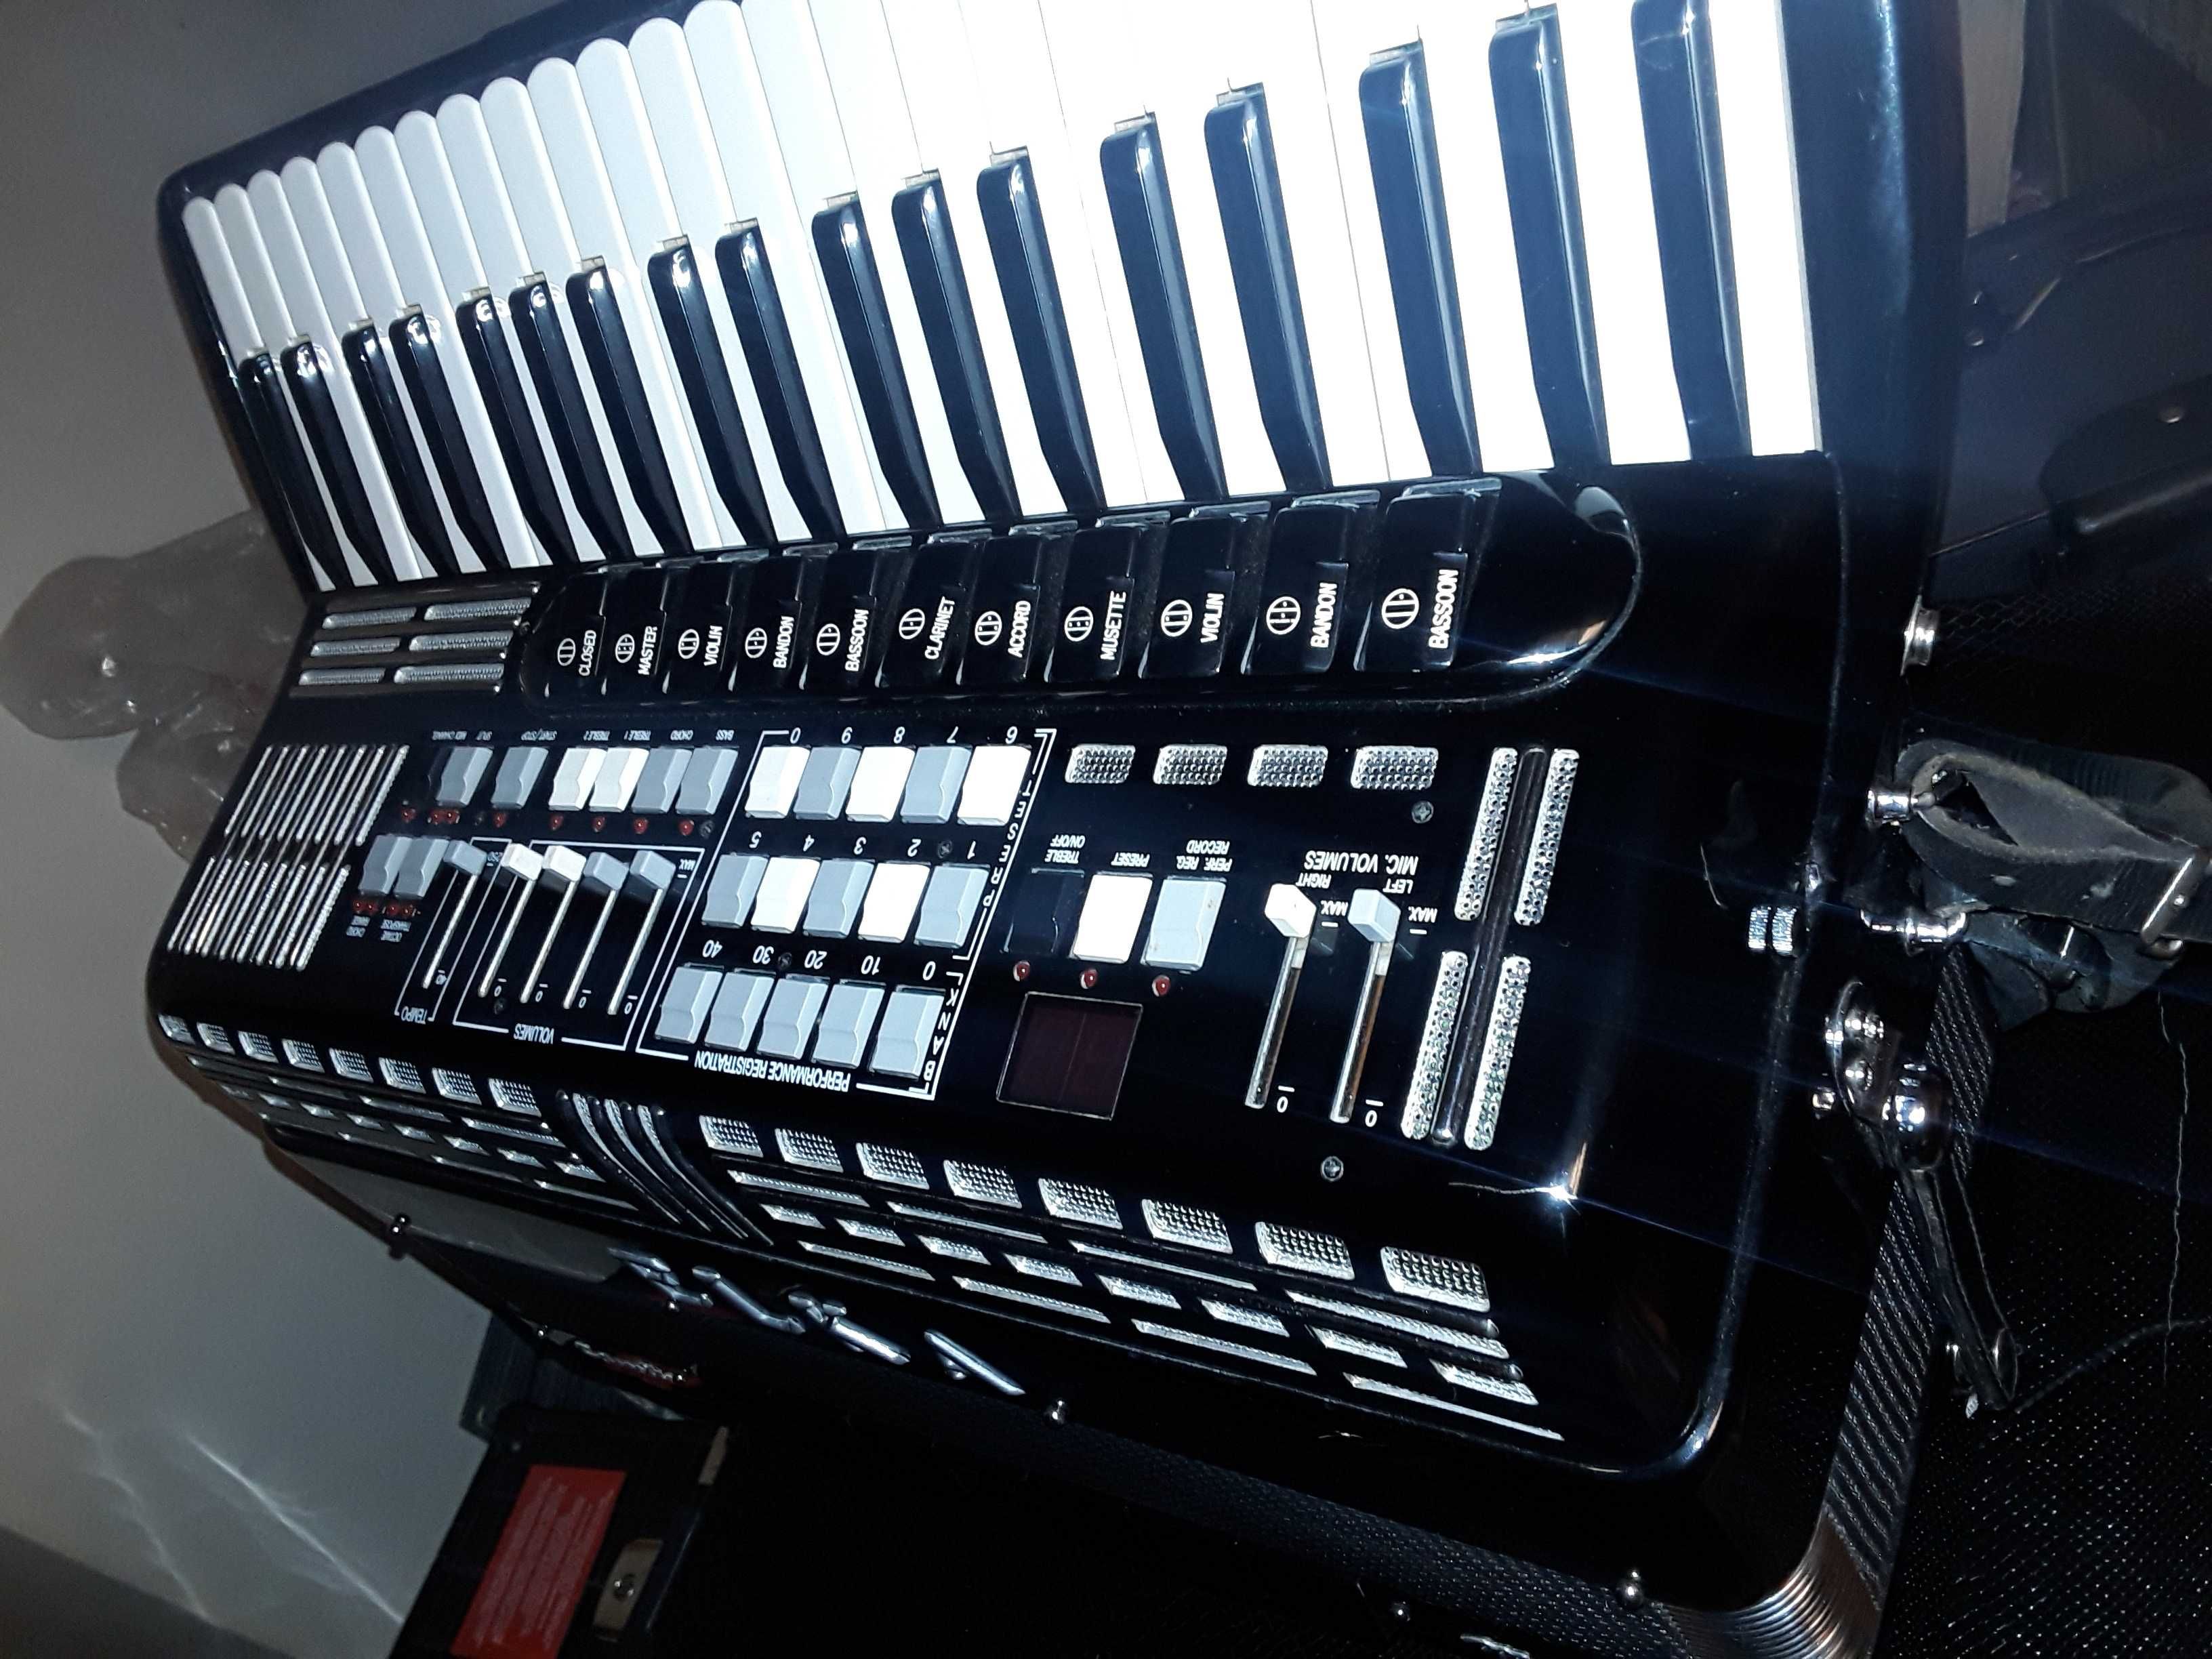 vand acordeon italian ELKA impecabil, ca nou cu midi de fabrică.